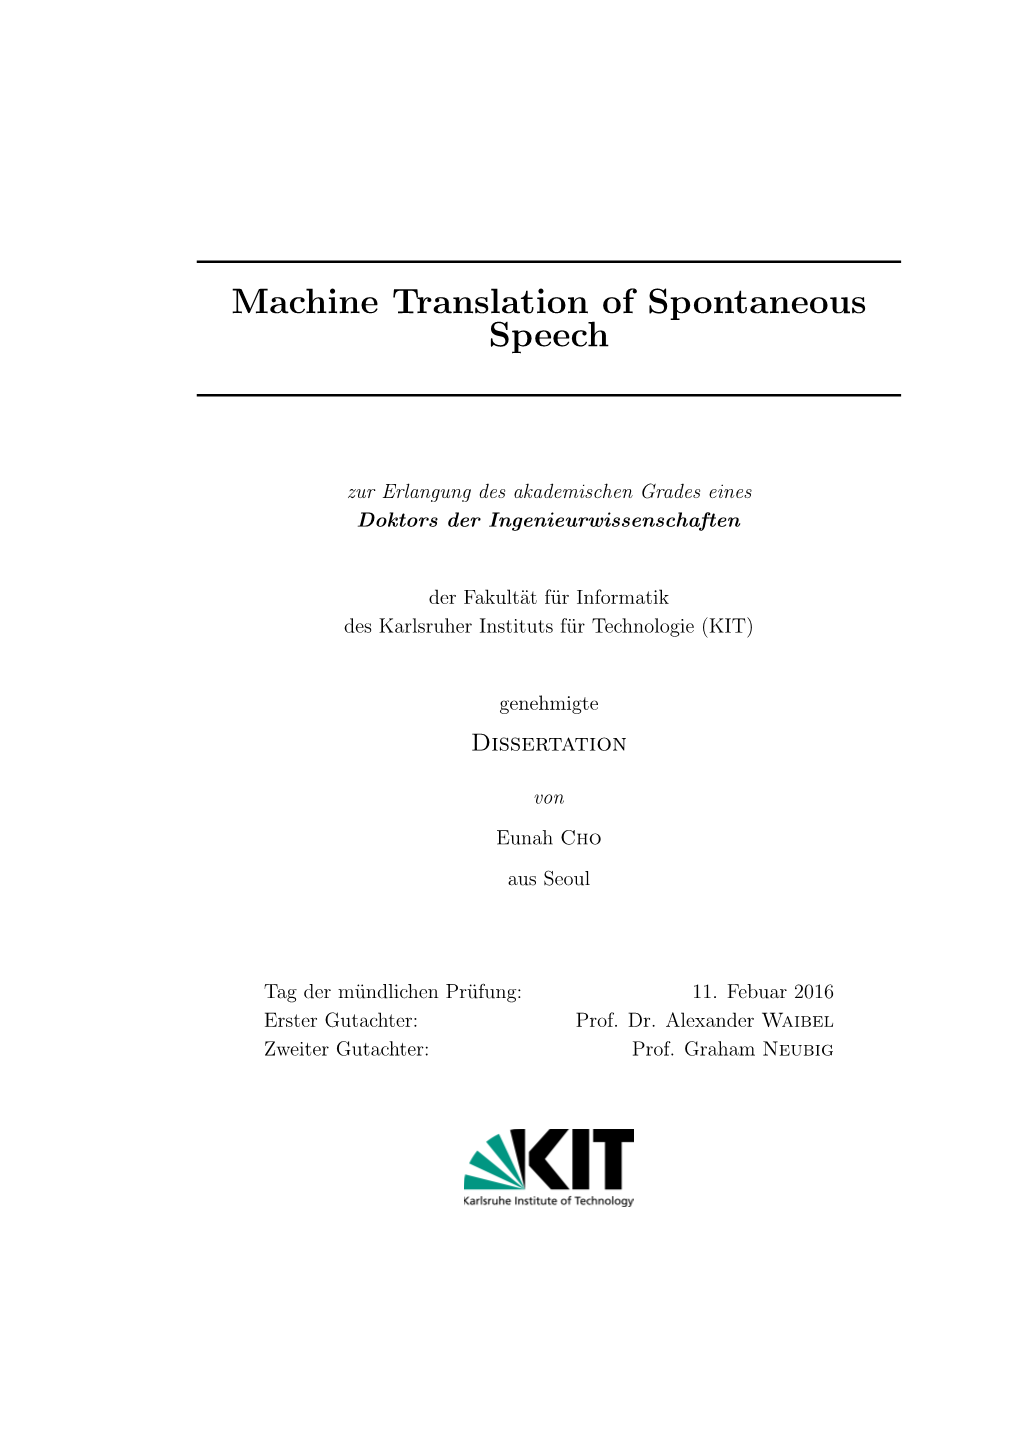 Machine Translation of Spontaneous Speech